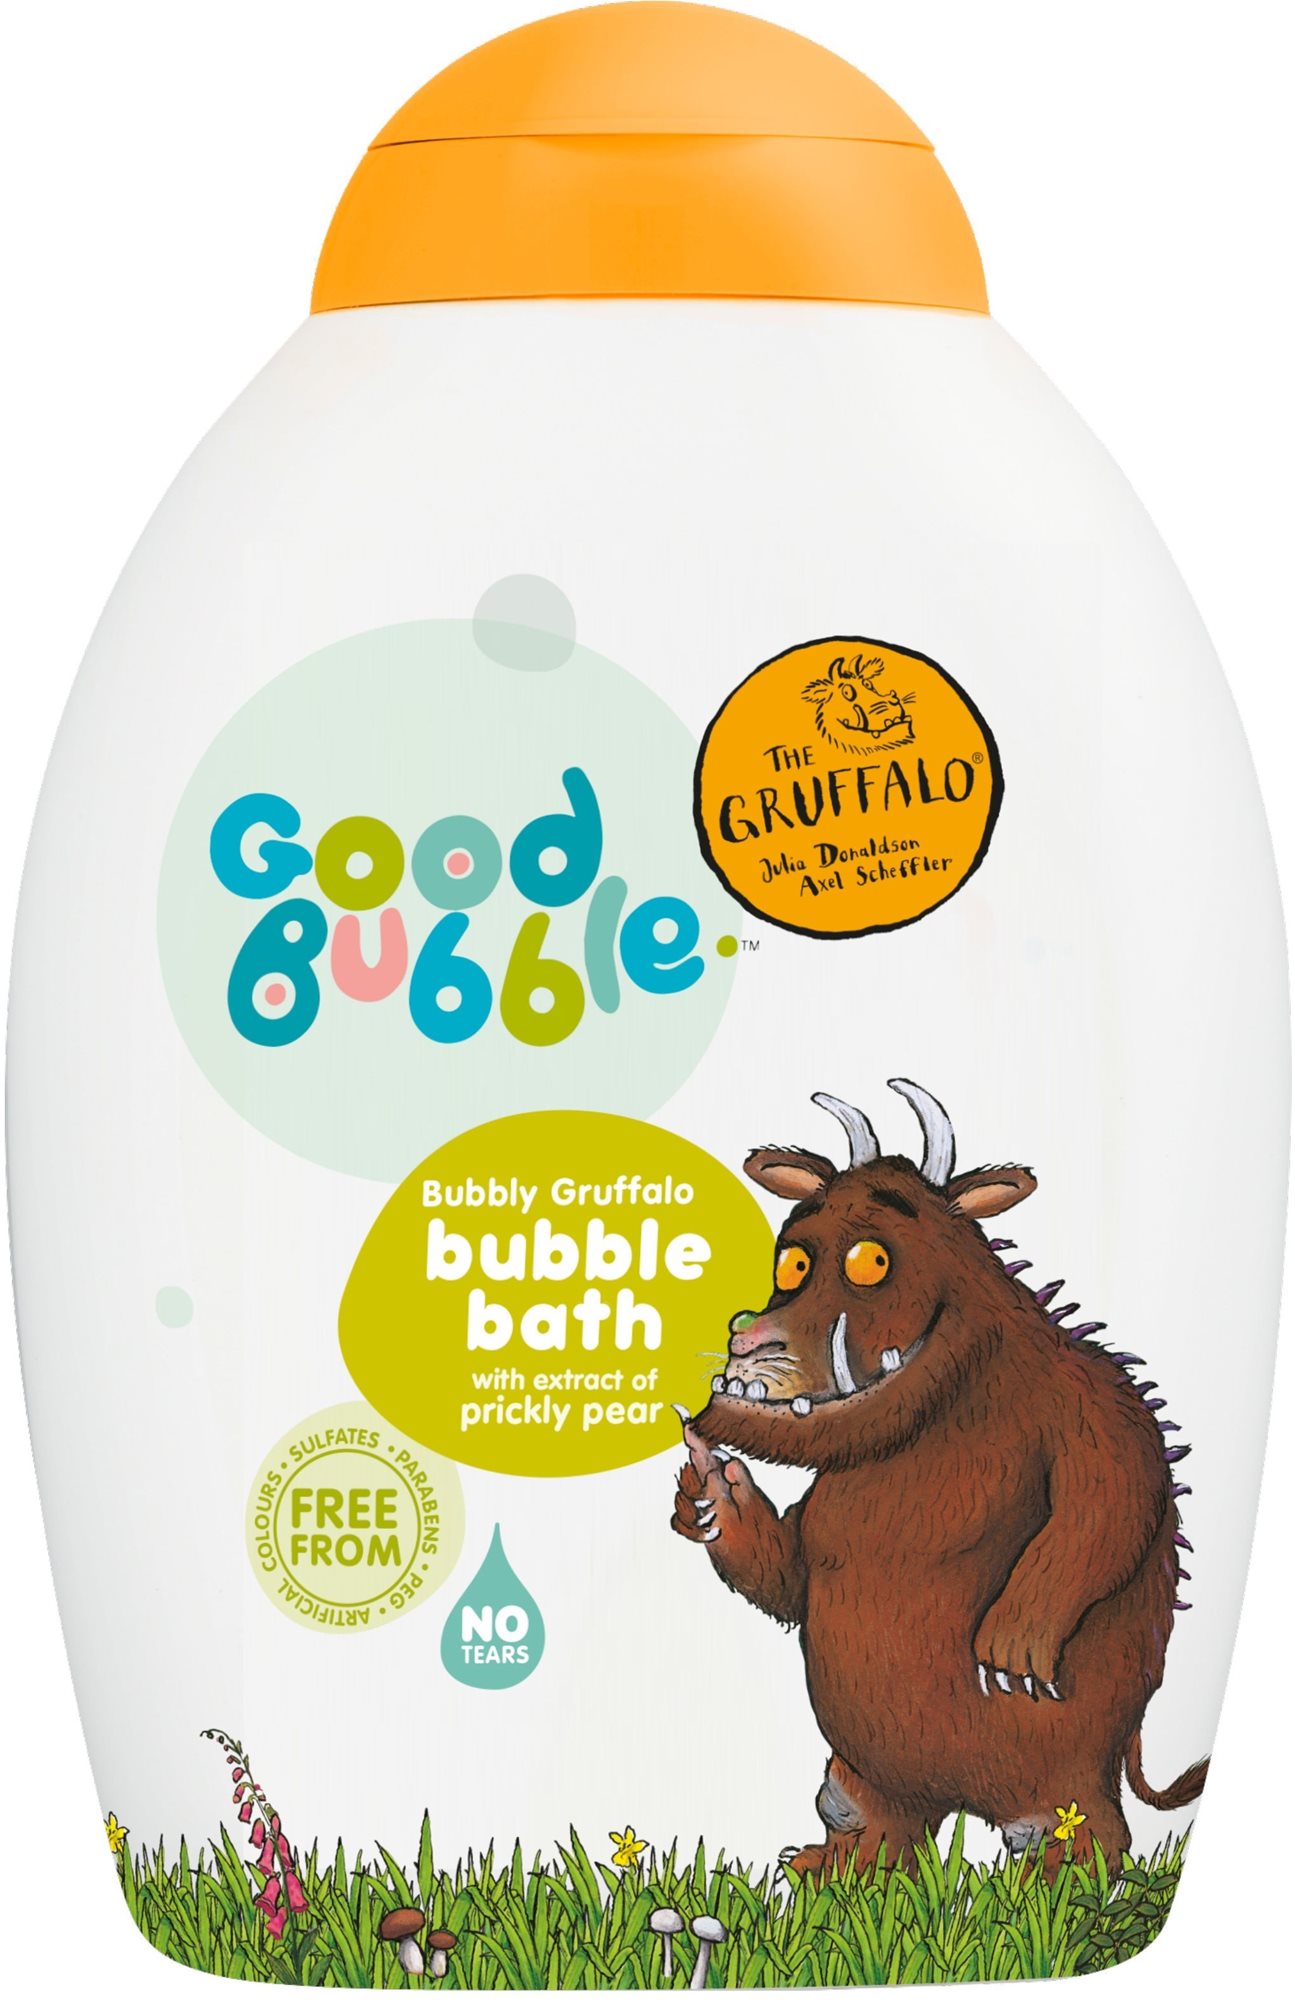 Good Bubble gruffalo opuncia 400 ml